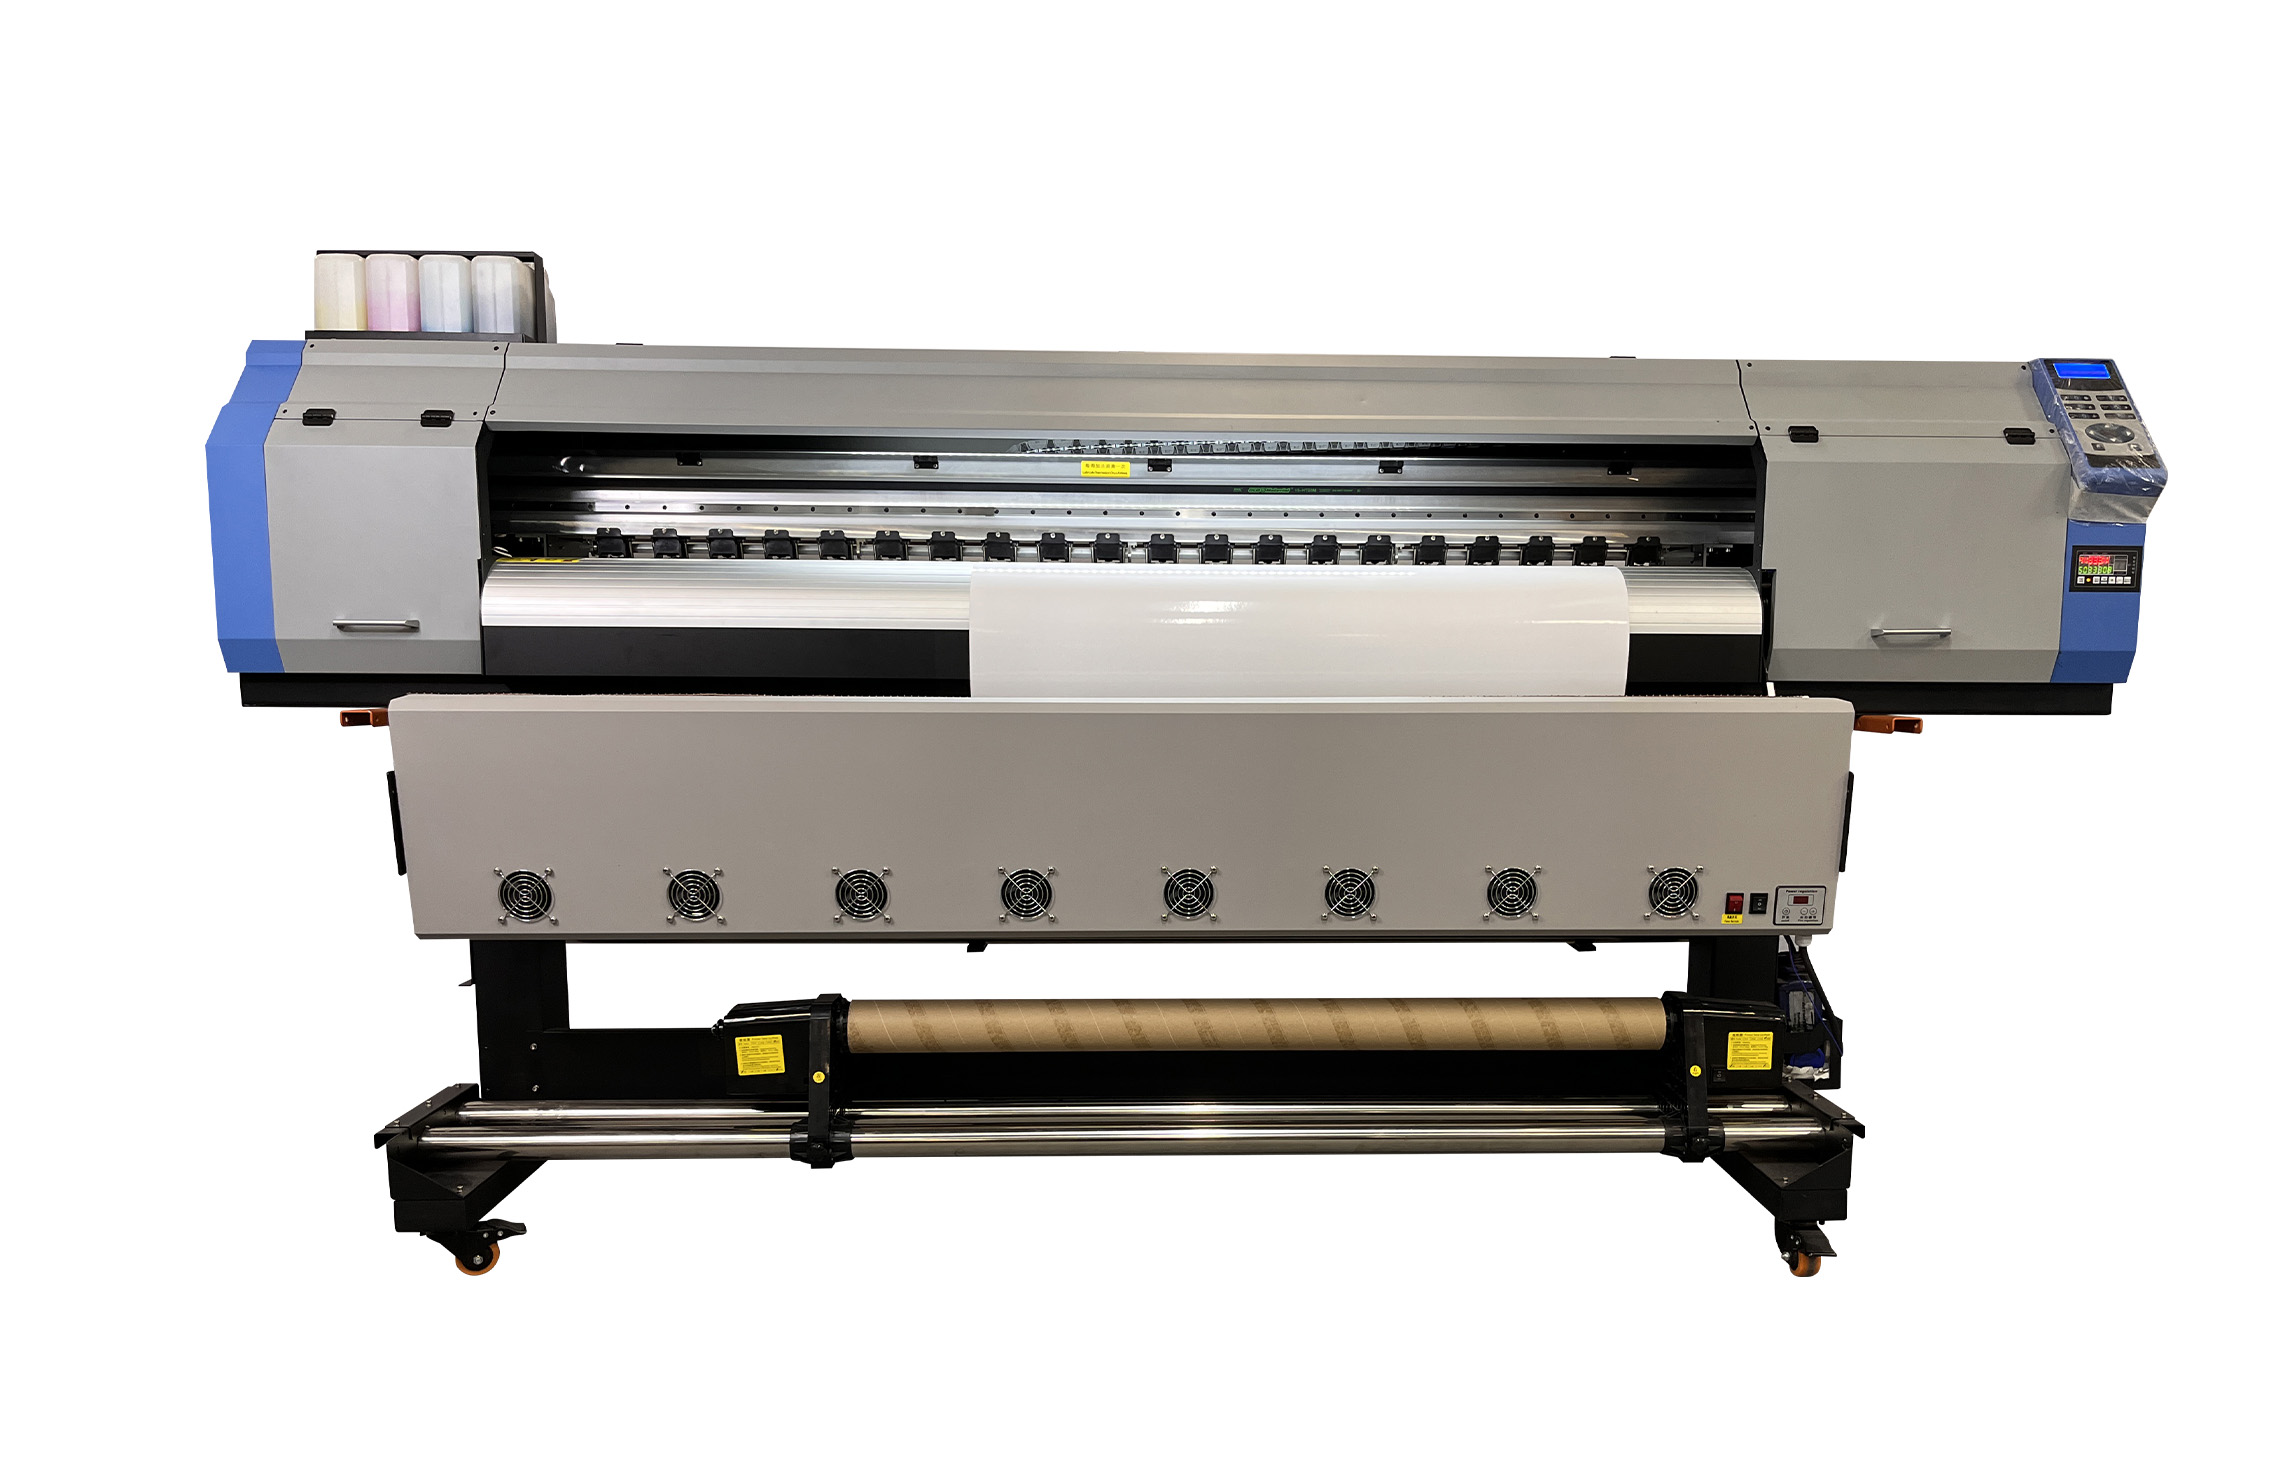  Taimes T1802-Epson i3200-2H ECOinkjet Printer